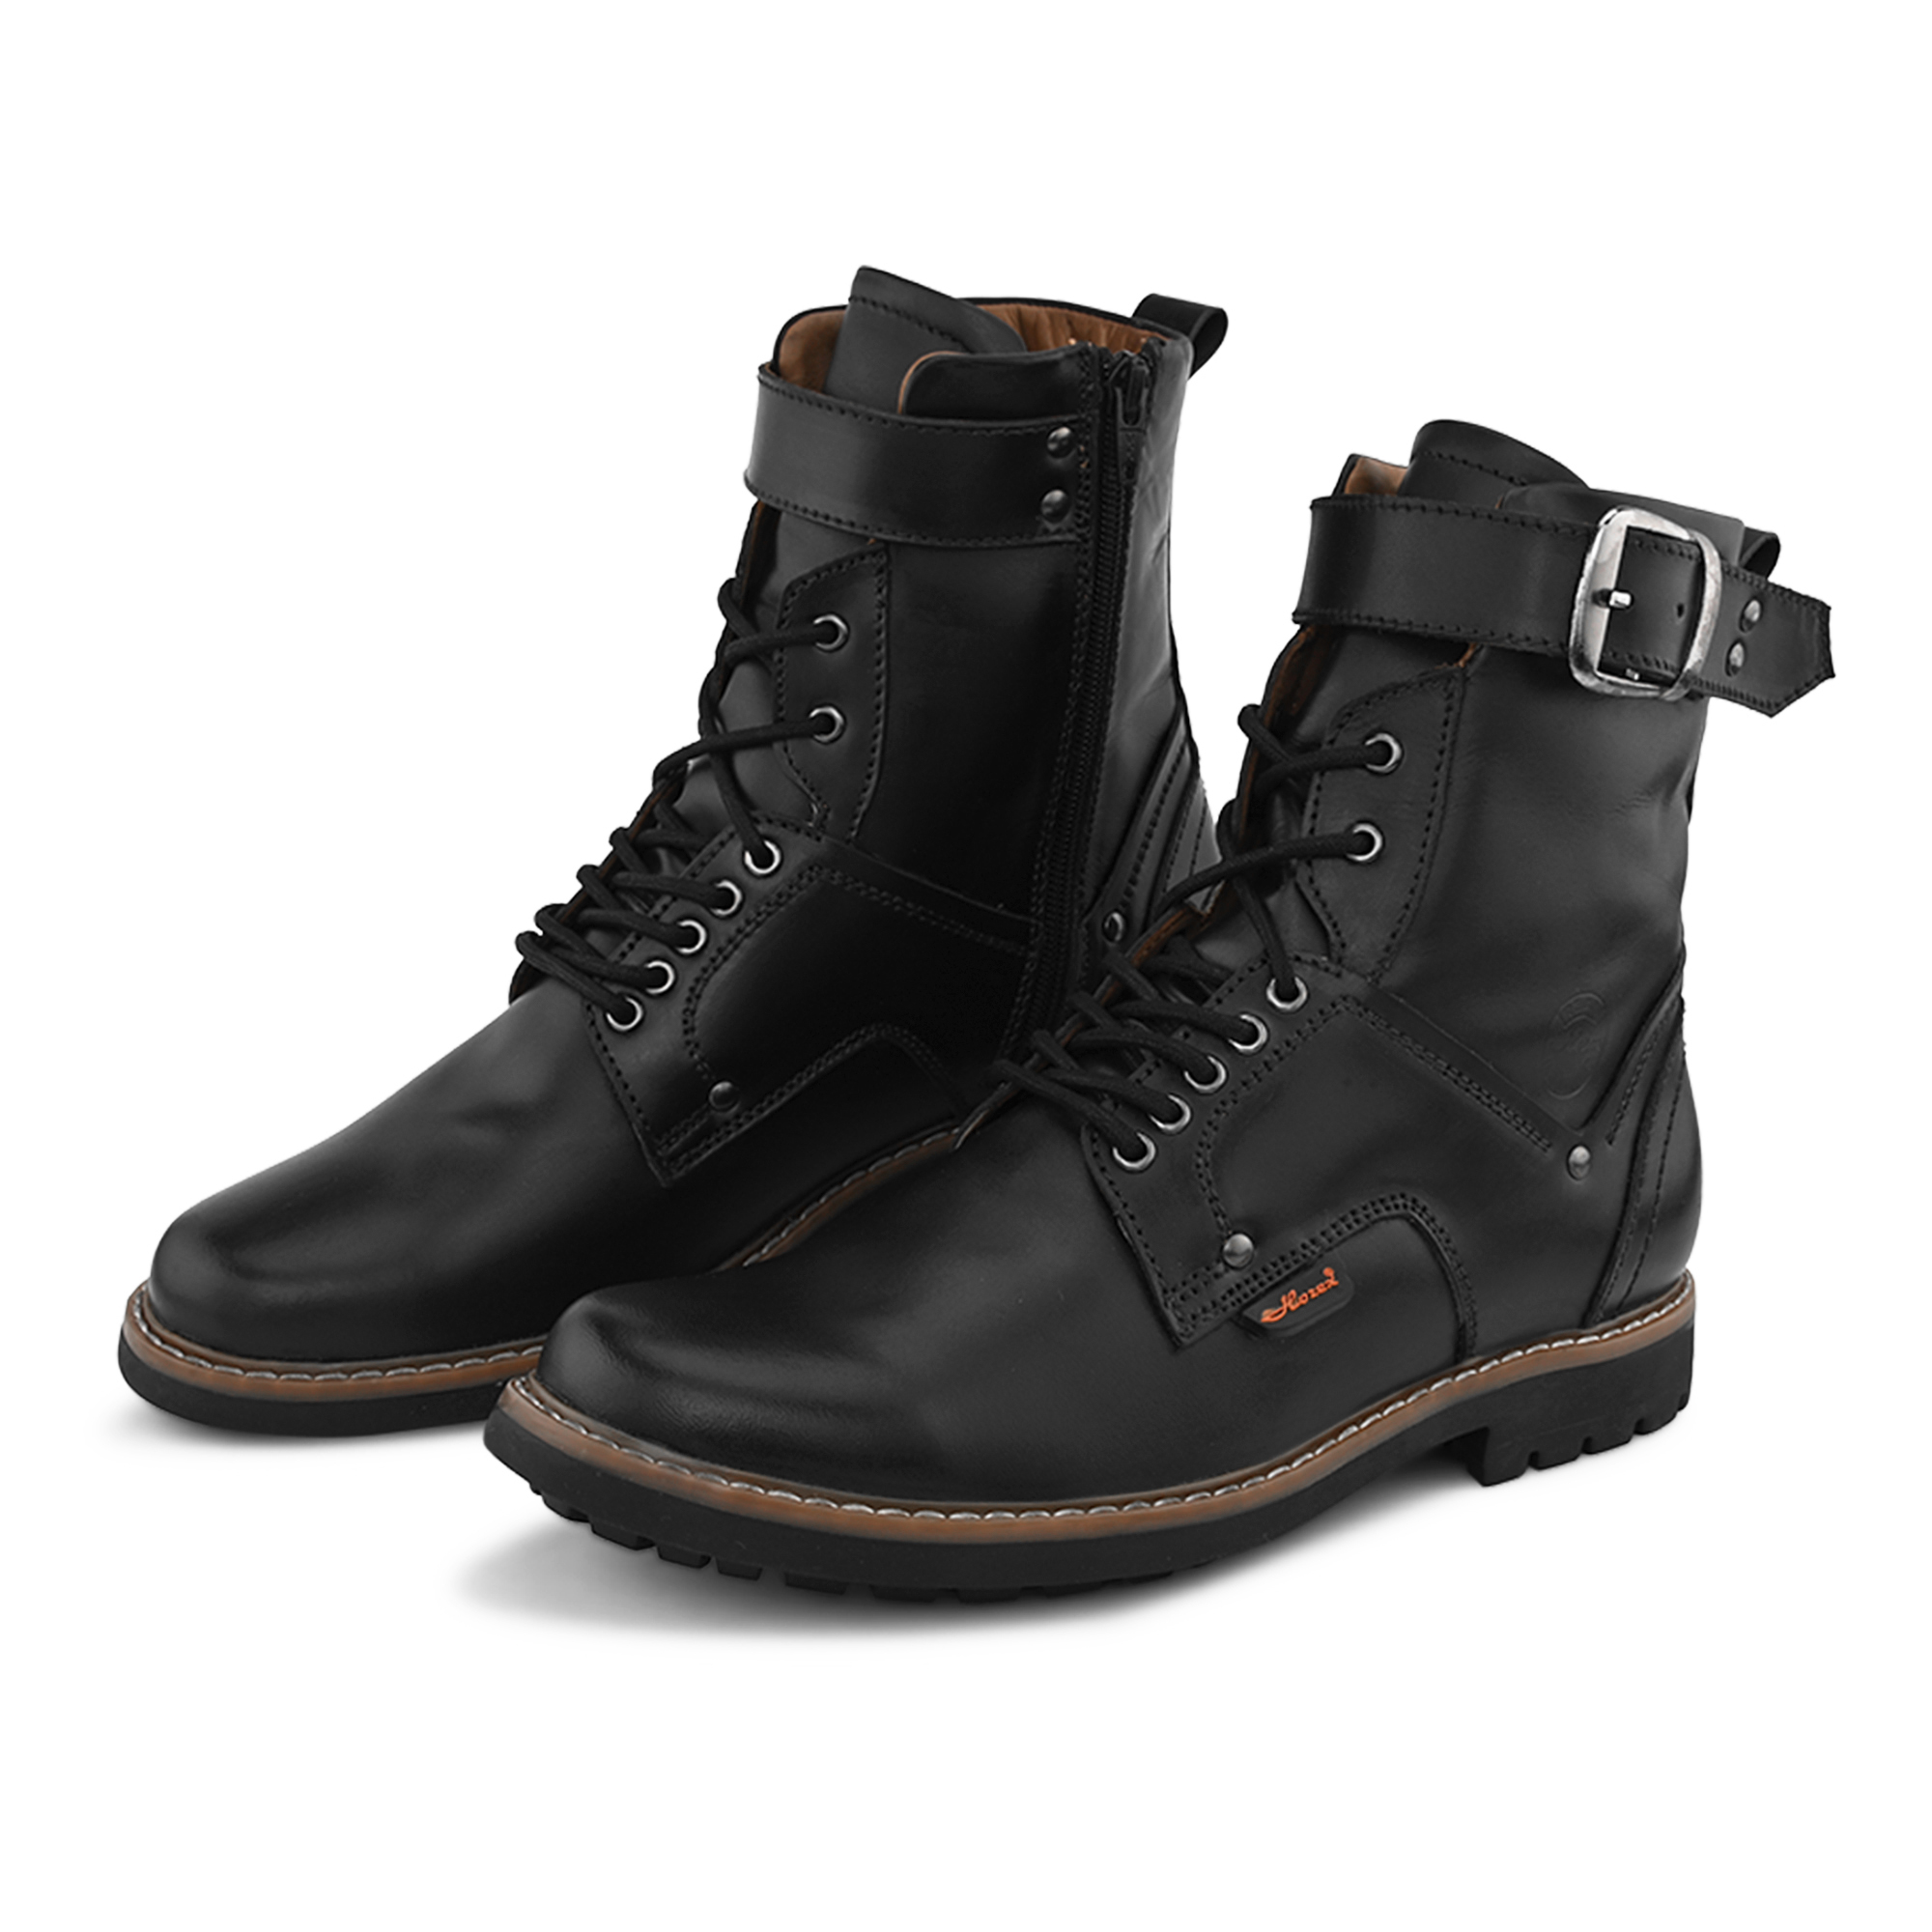 black long boots for men at horex.in